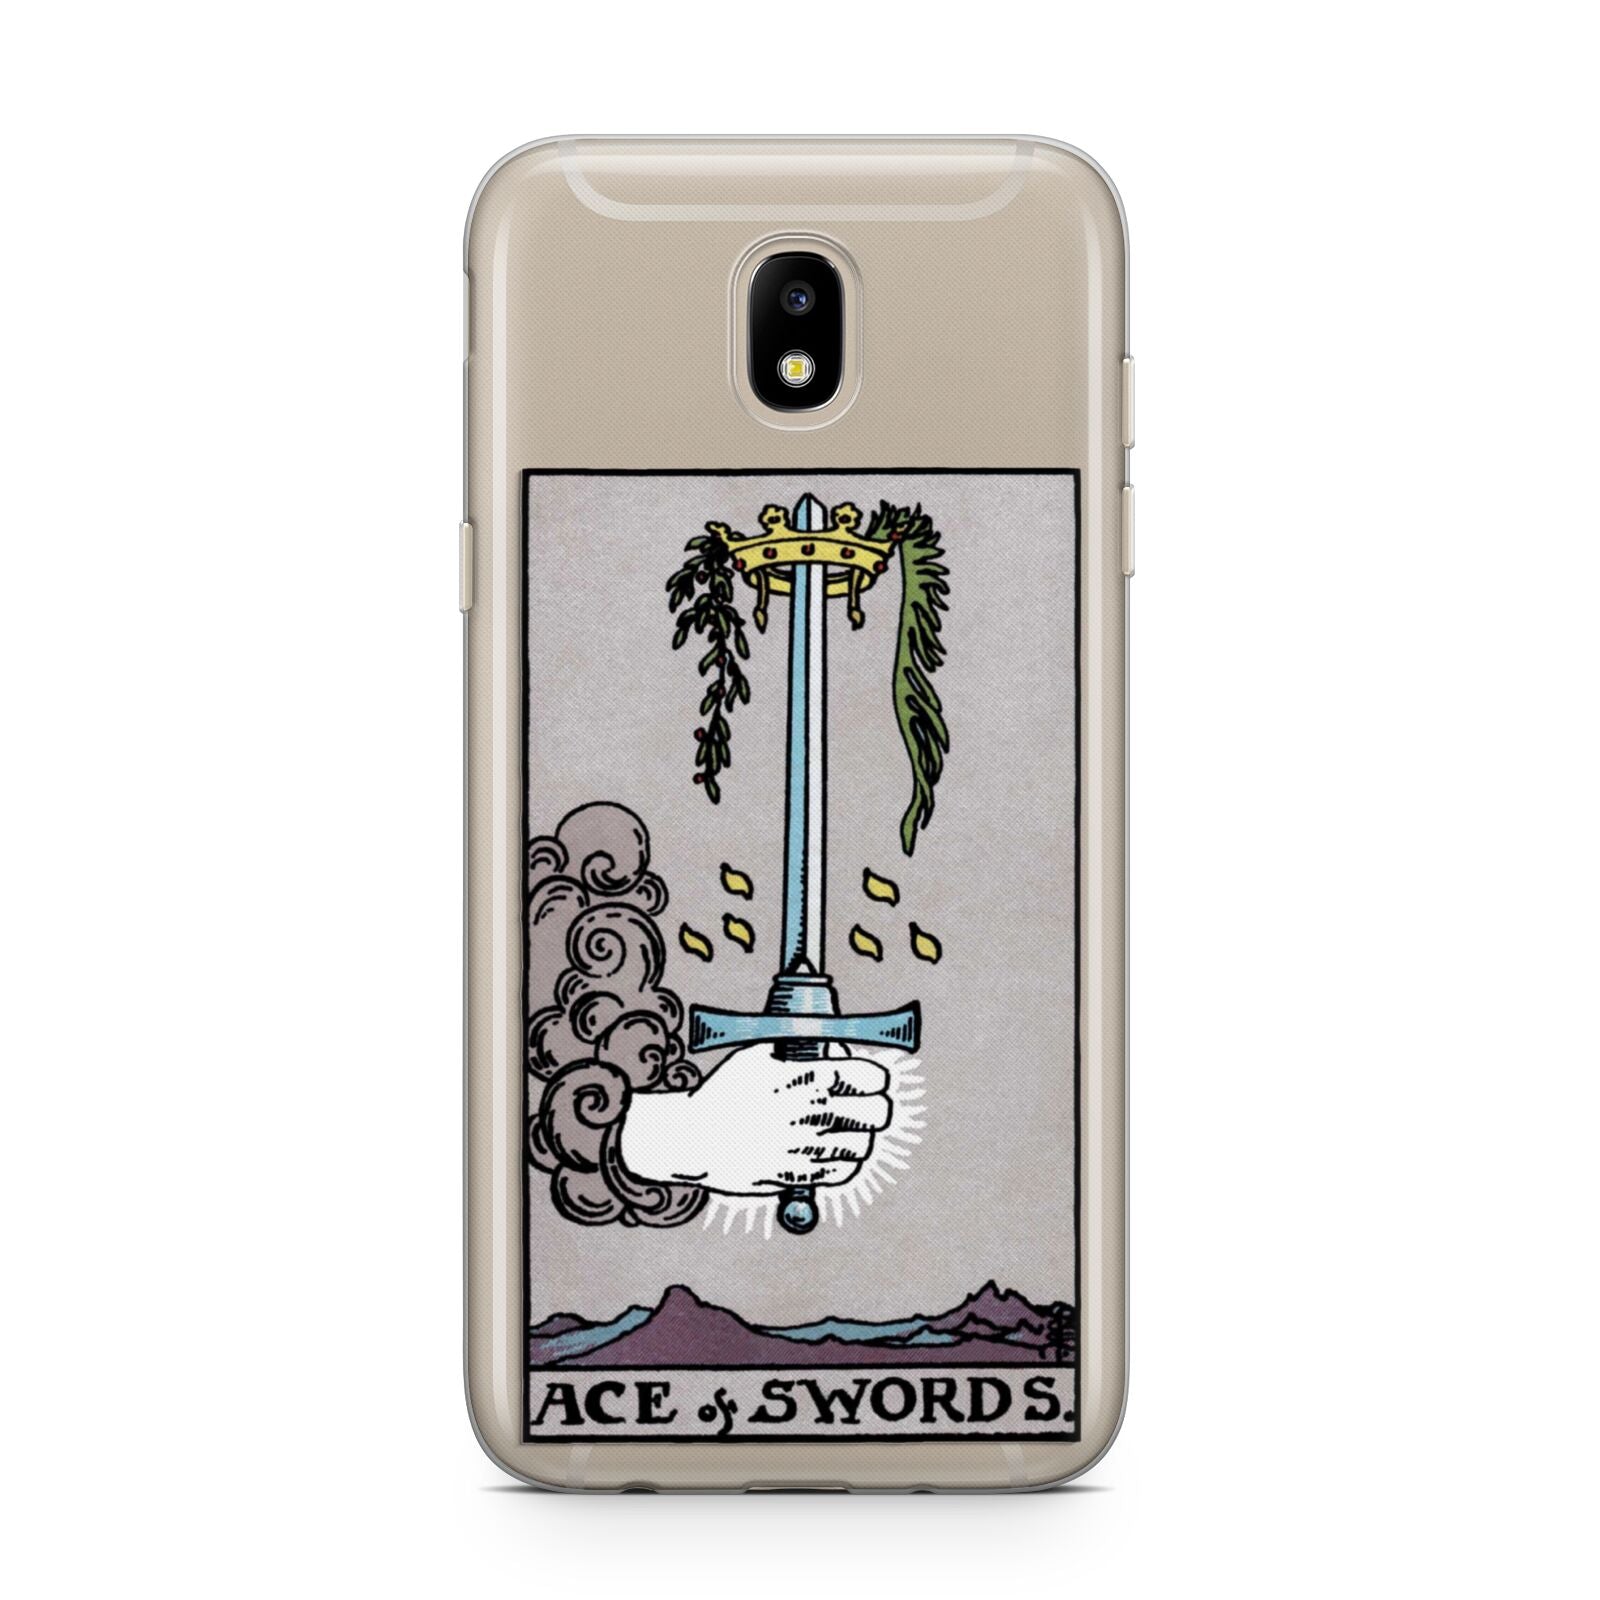 Ace of Swords Tarot Card Samsung J5 2017 Case